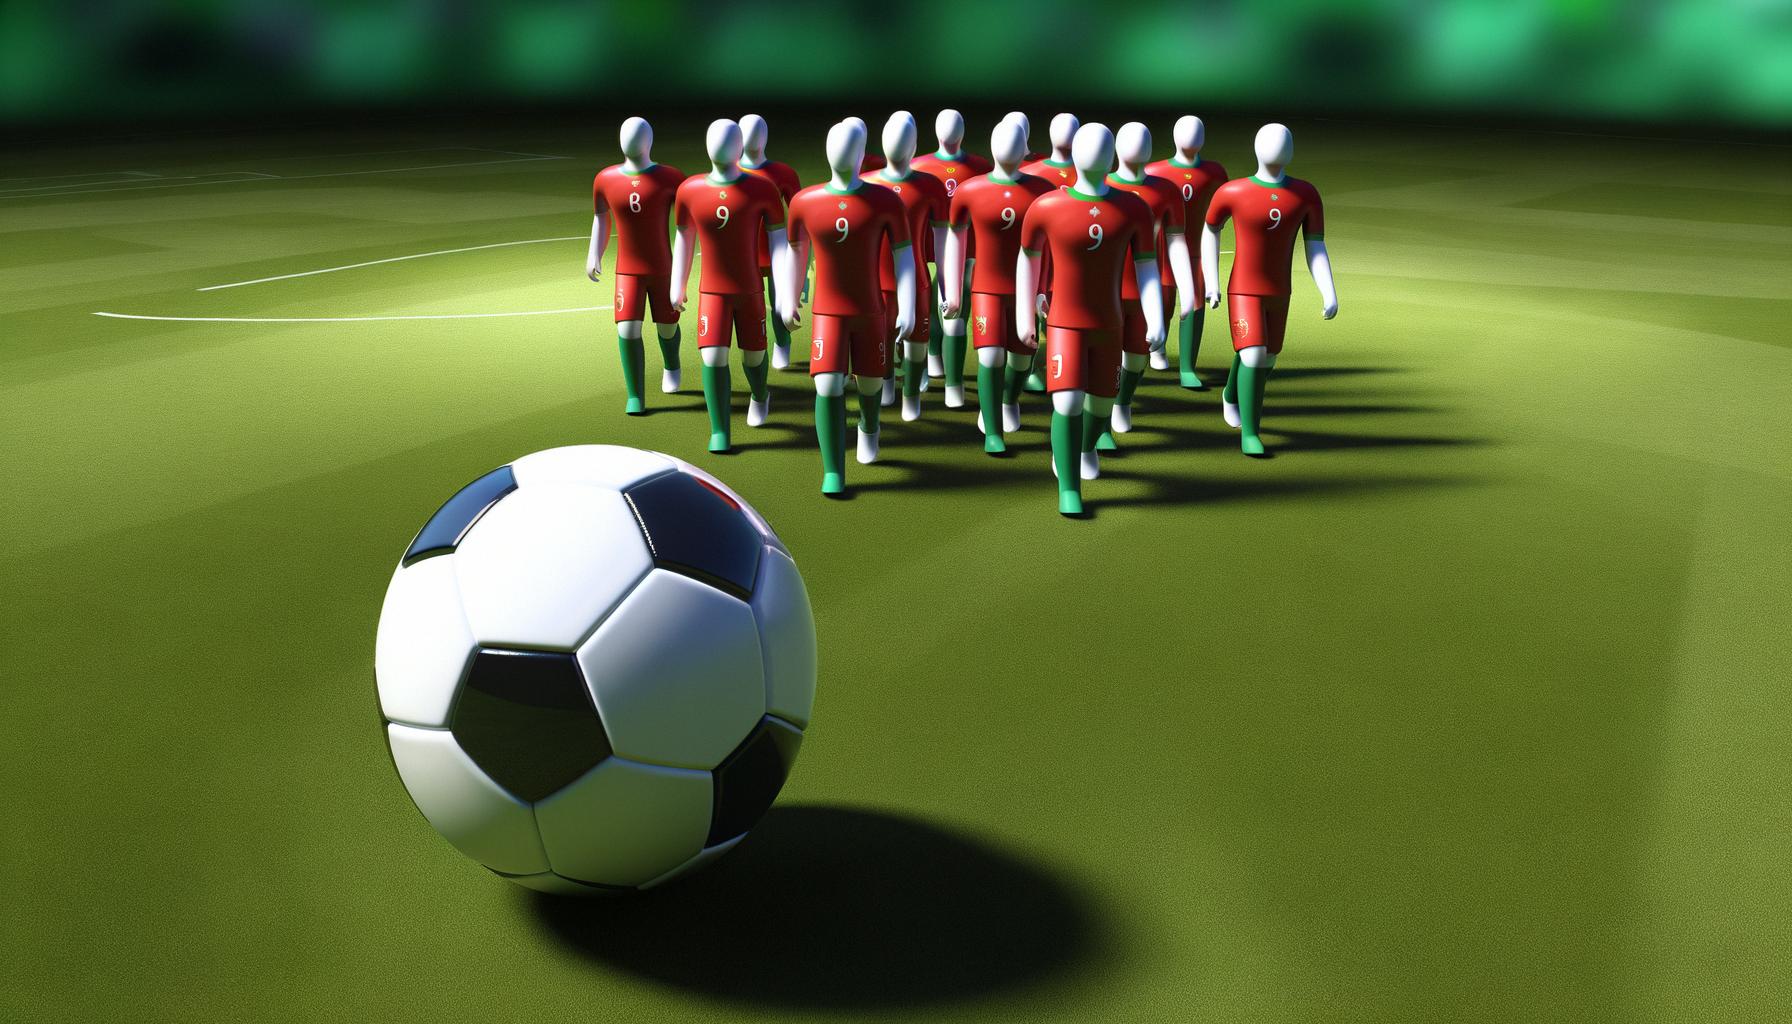 Portugal retains strong performance, balancing Ronaldo's leadership and teamwork.